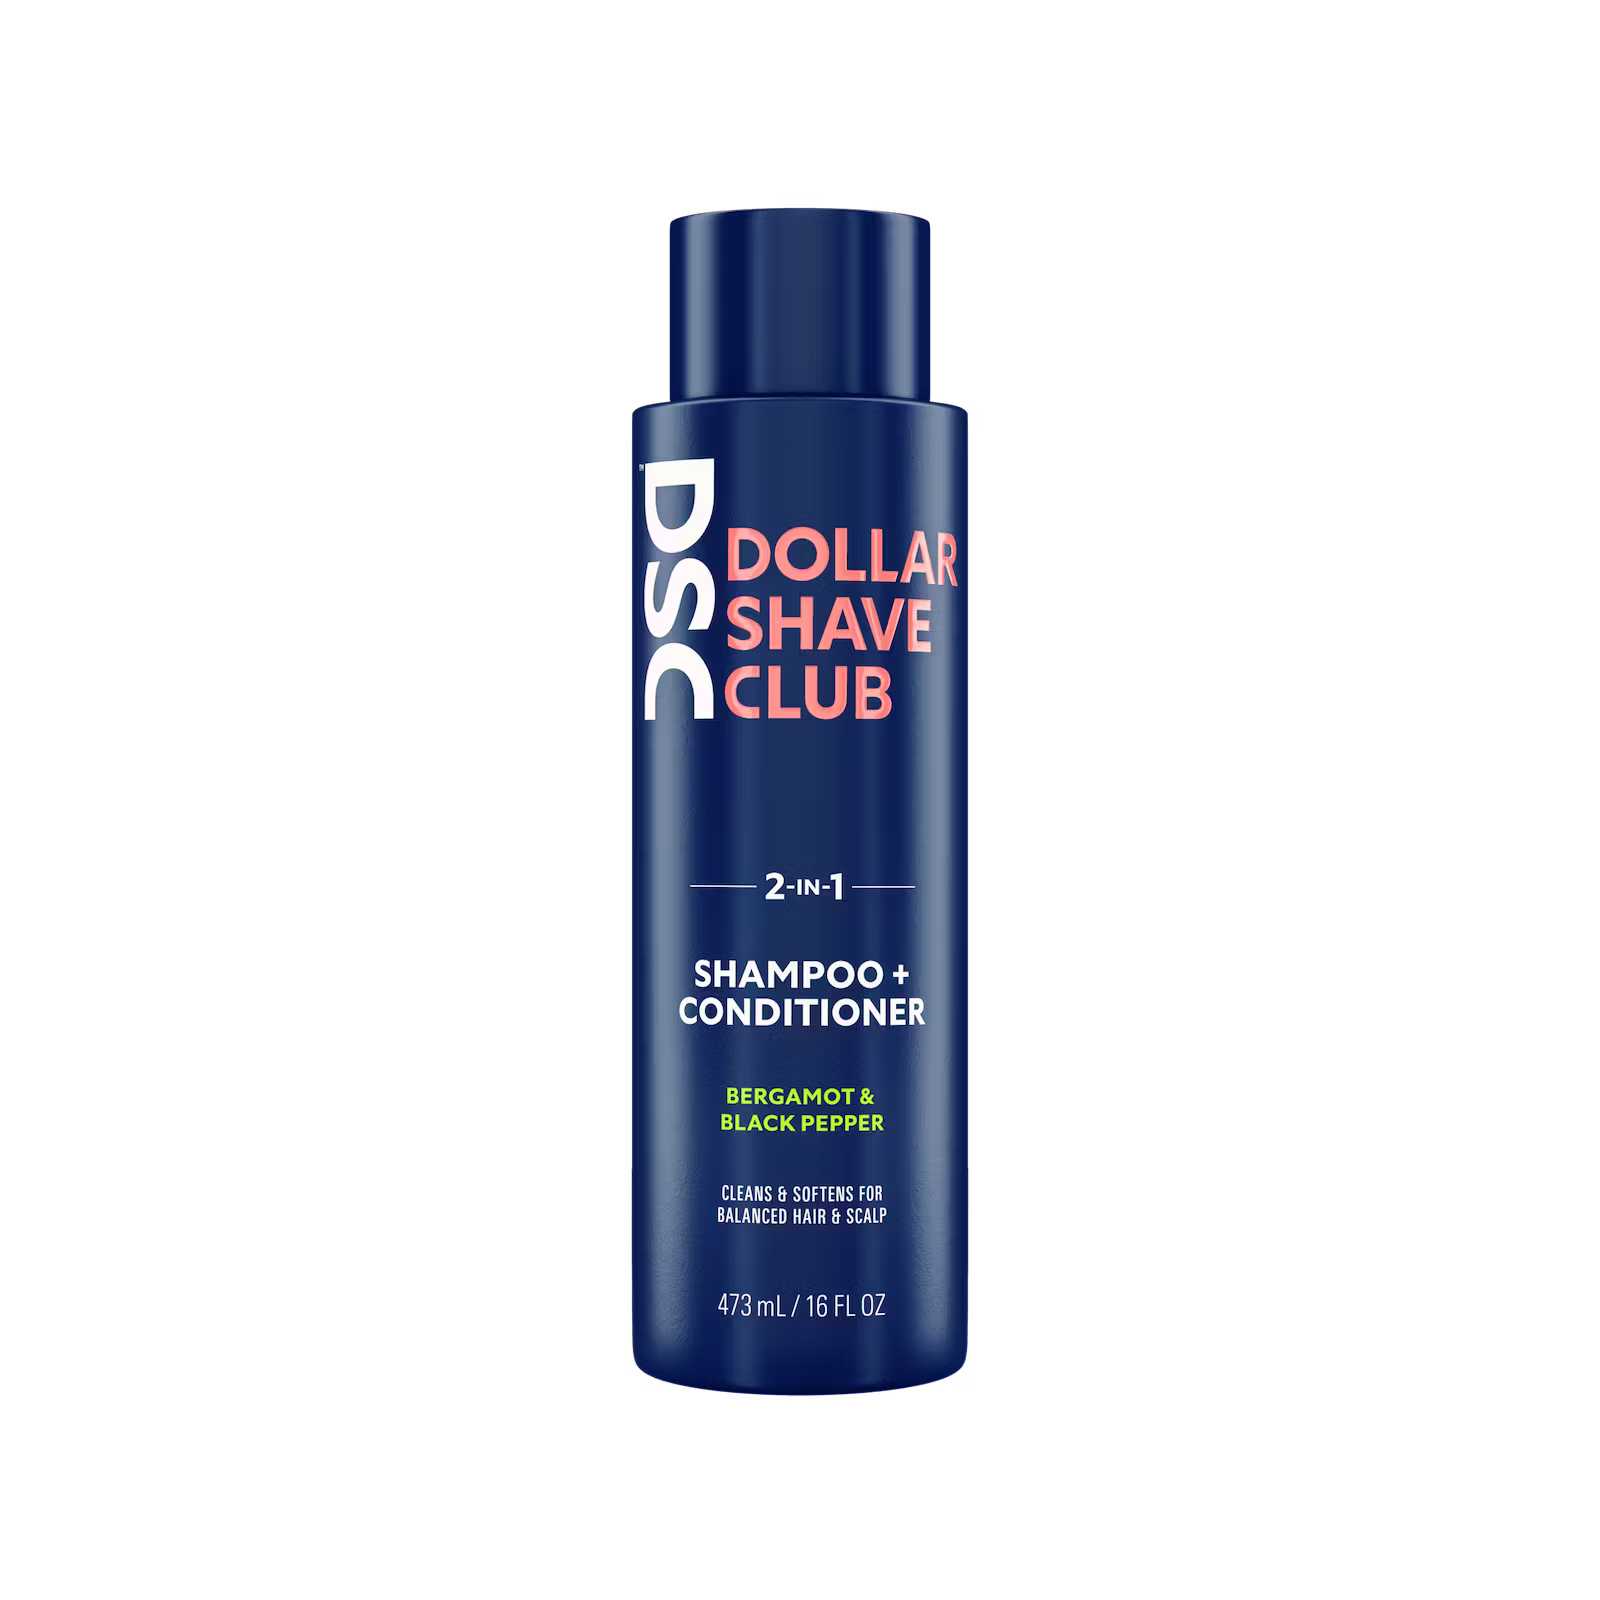 Dollar Shave Club Shampoo and Conditioner Bergamot Black Pepper against blank backdrop.